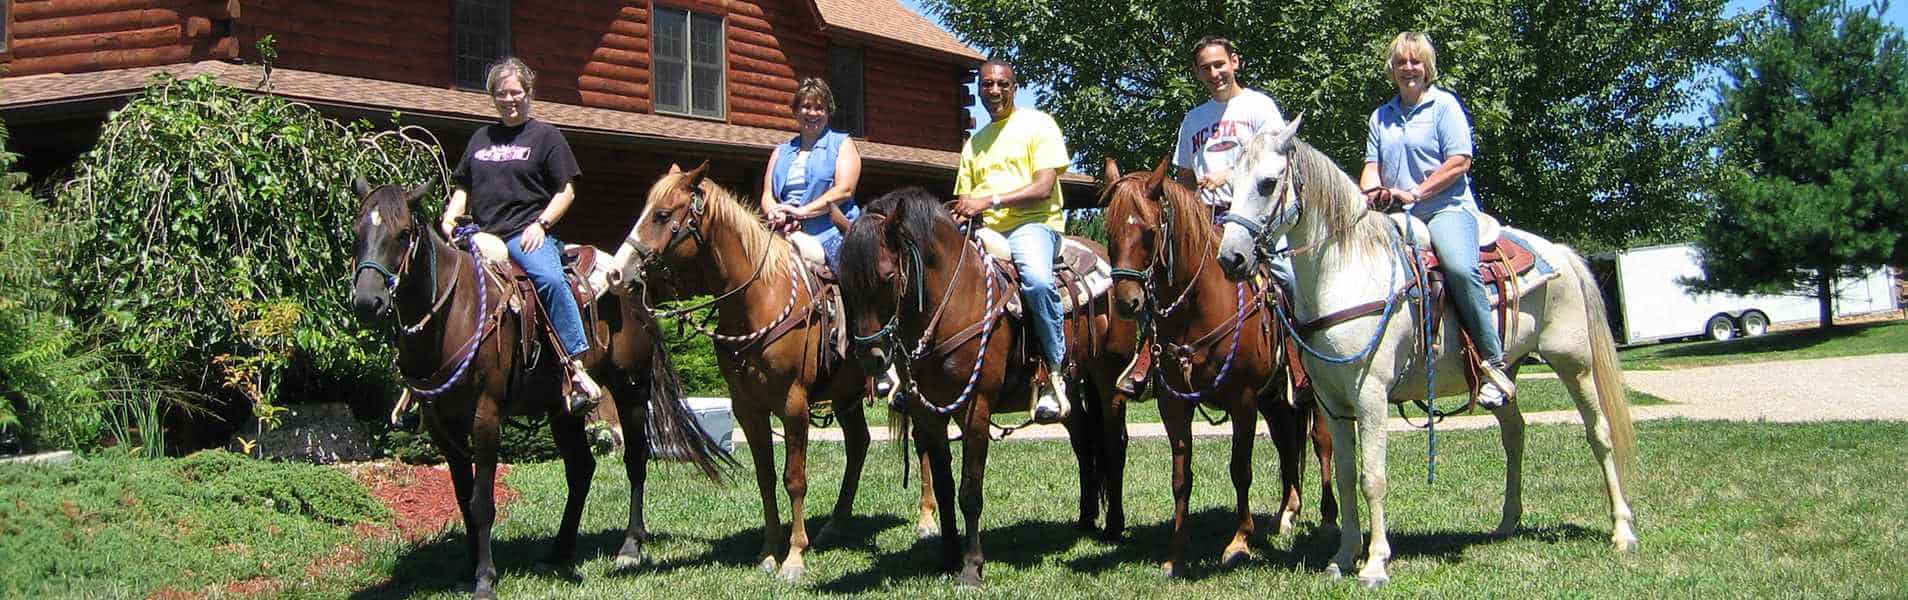 group-of-horseback-riders